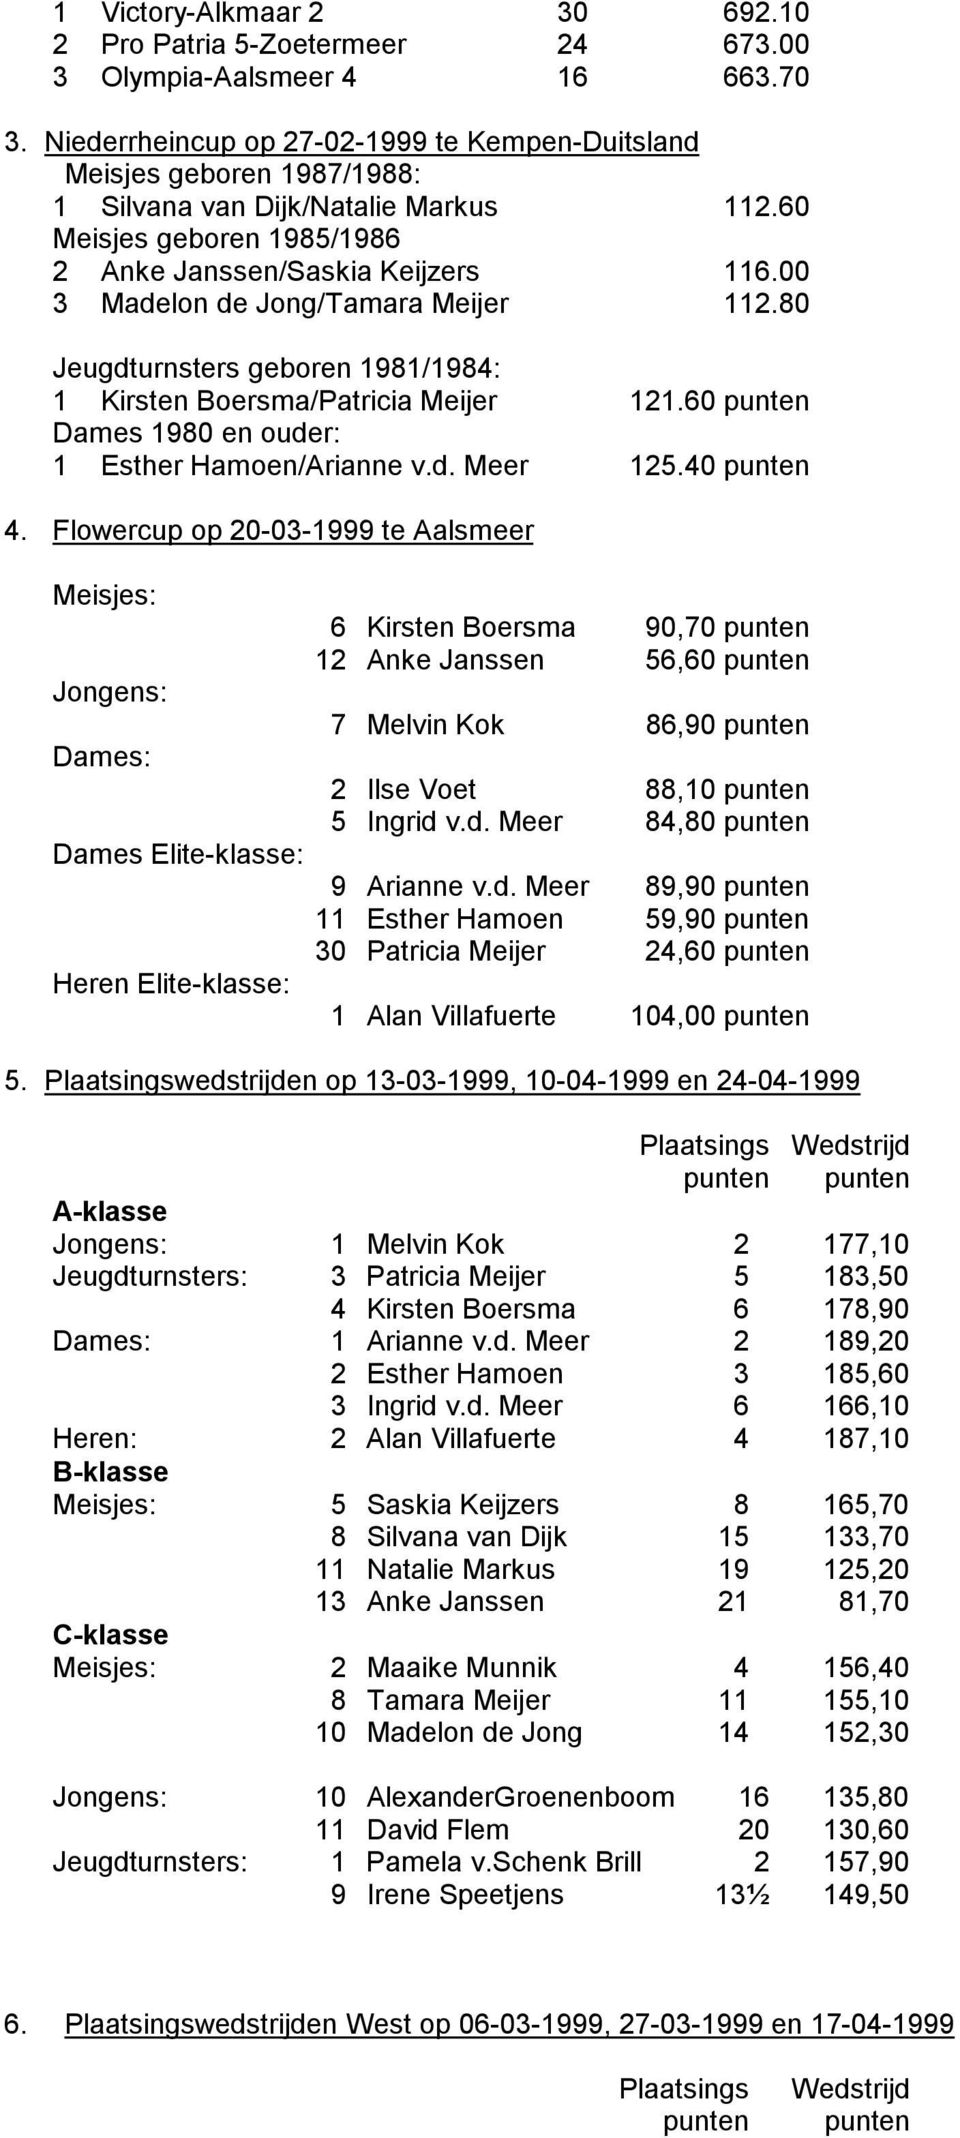 00 3 Madelon de Jong/Tamara Meijer 112.80 Jeugdturnsters geboren 1981/1984: 1 Kirsten Boersma/Patricia Meijer 121.60 punten Dames 1980 en ouder: 1 Esther Hamoen/Arianne v.d. Meer 125.40 punten 4.